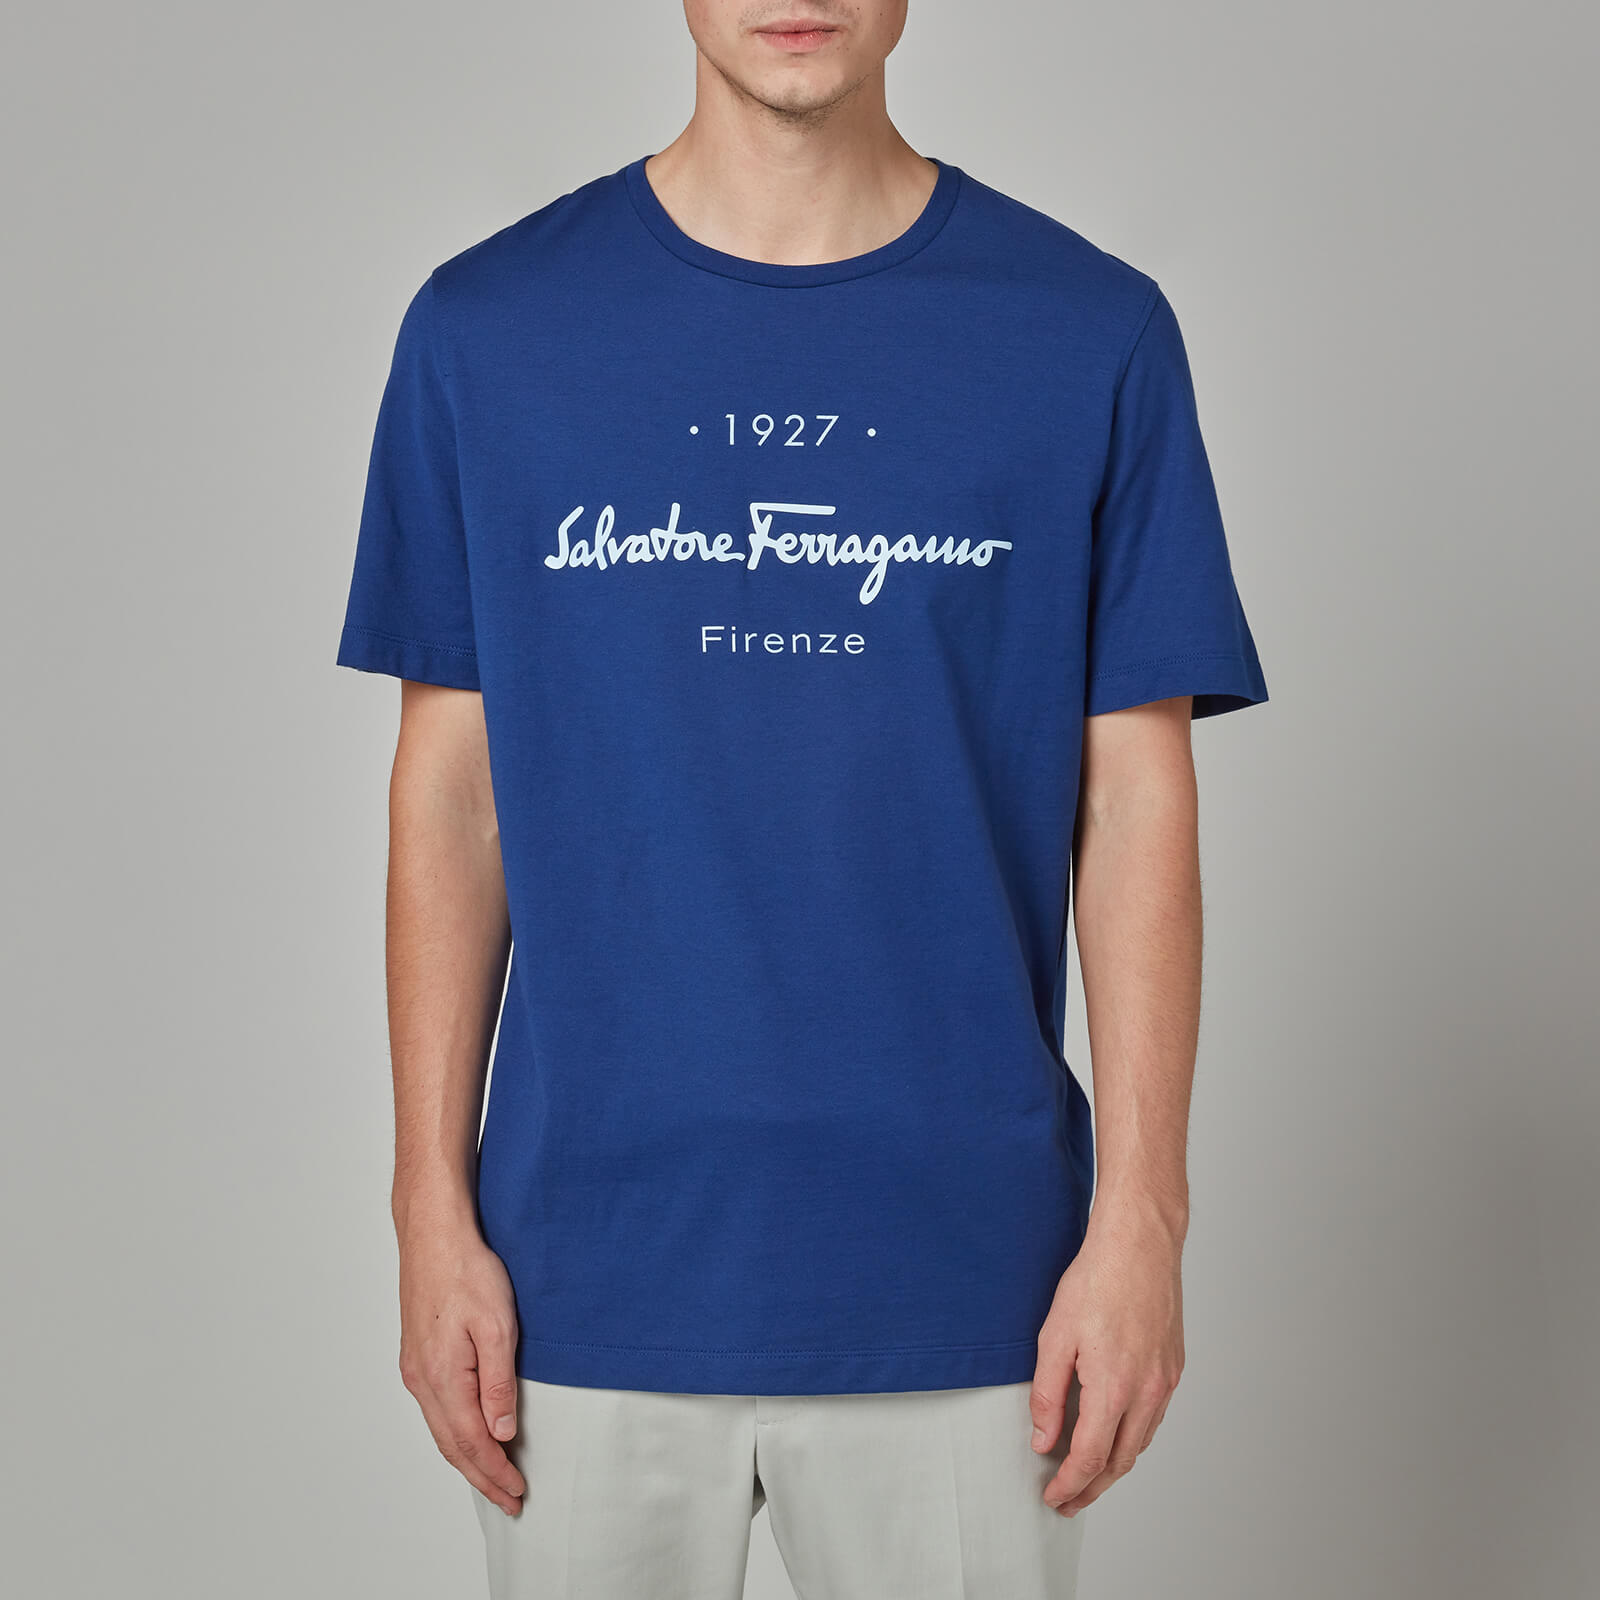 Salvatore Ferragamo Men's 1927 Logo T-Shirt - Pacific Ocean Blue/Flower - S